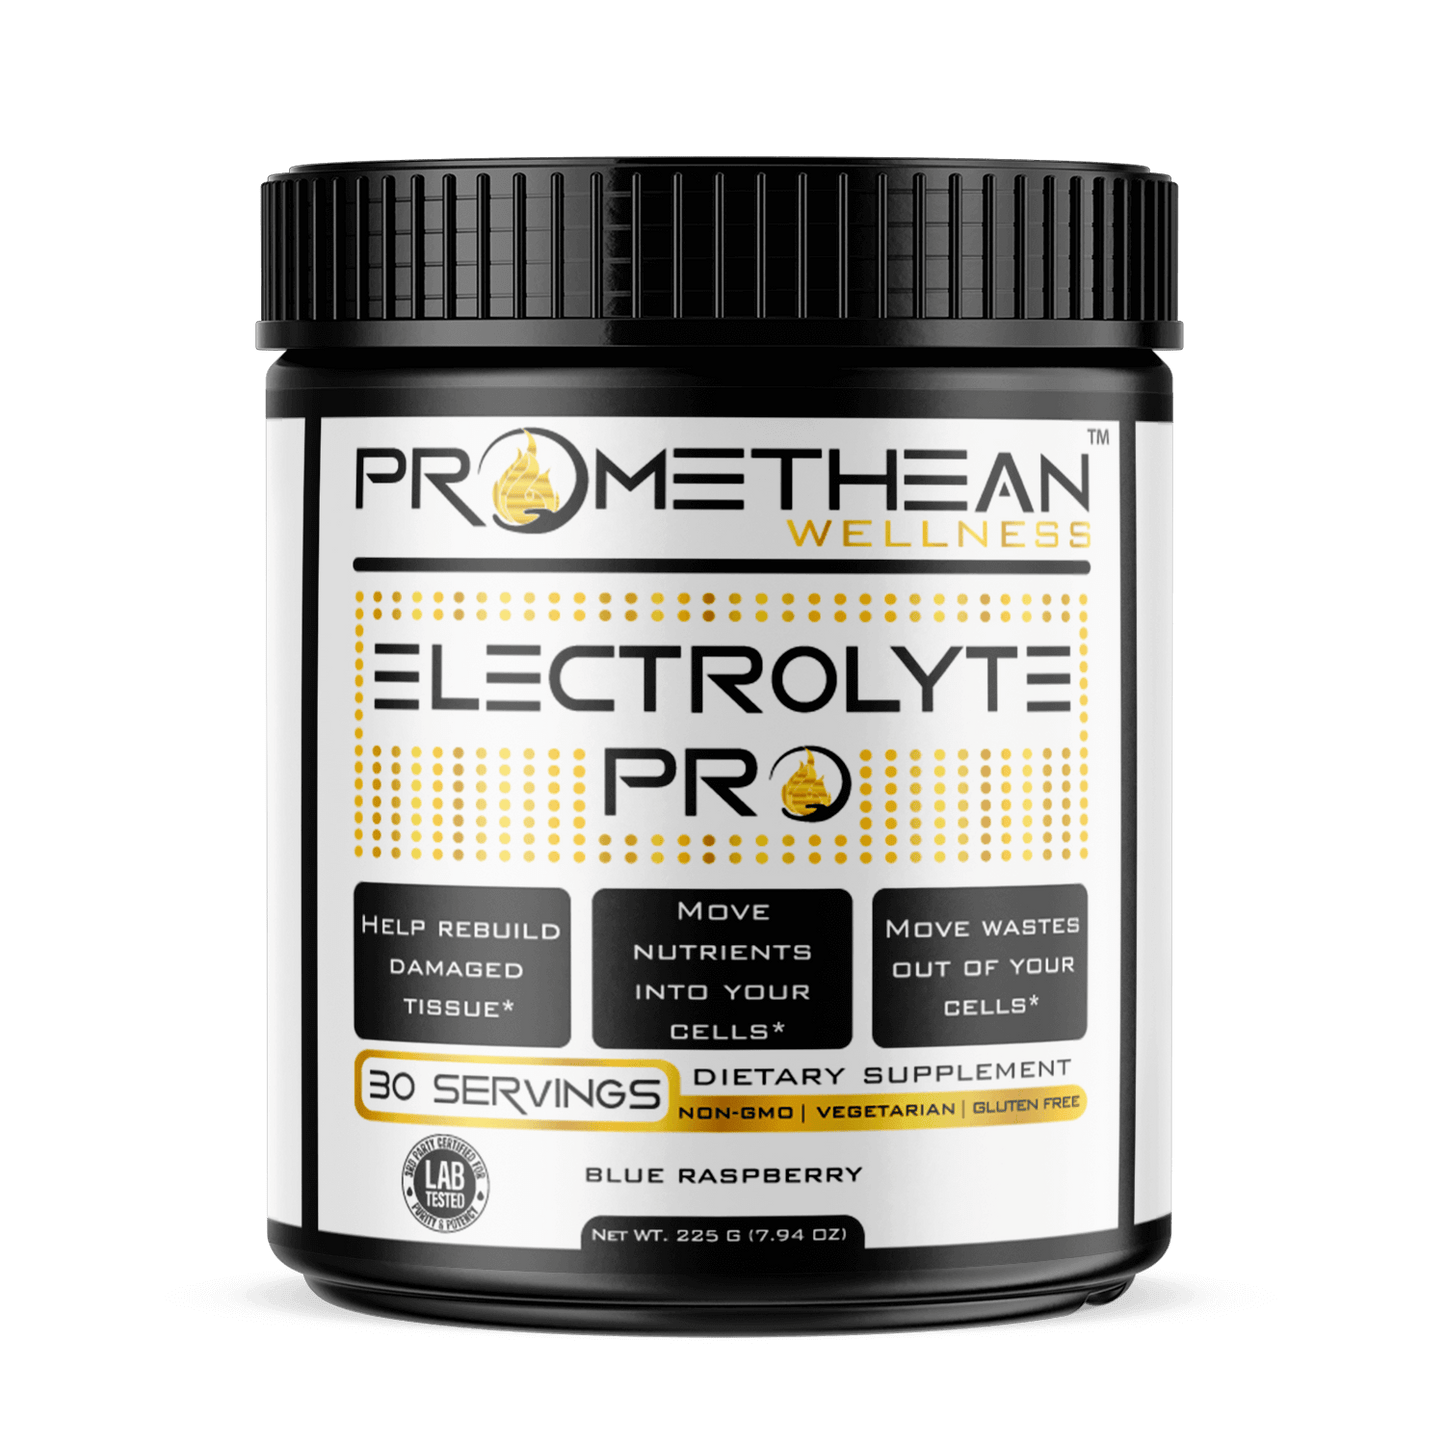 Electrolyte Pro